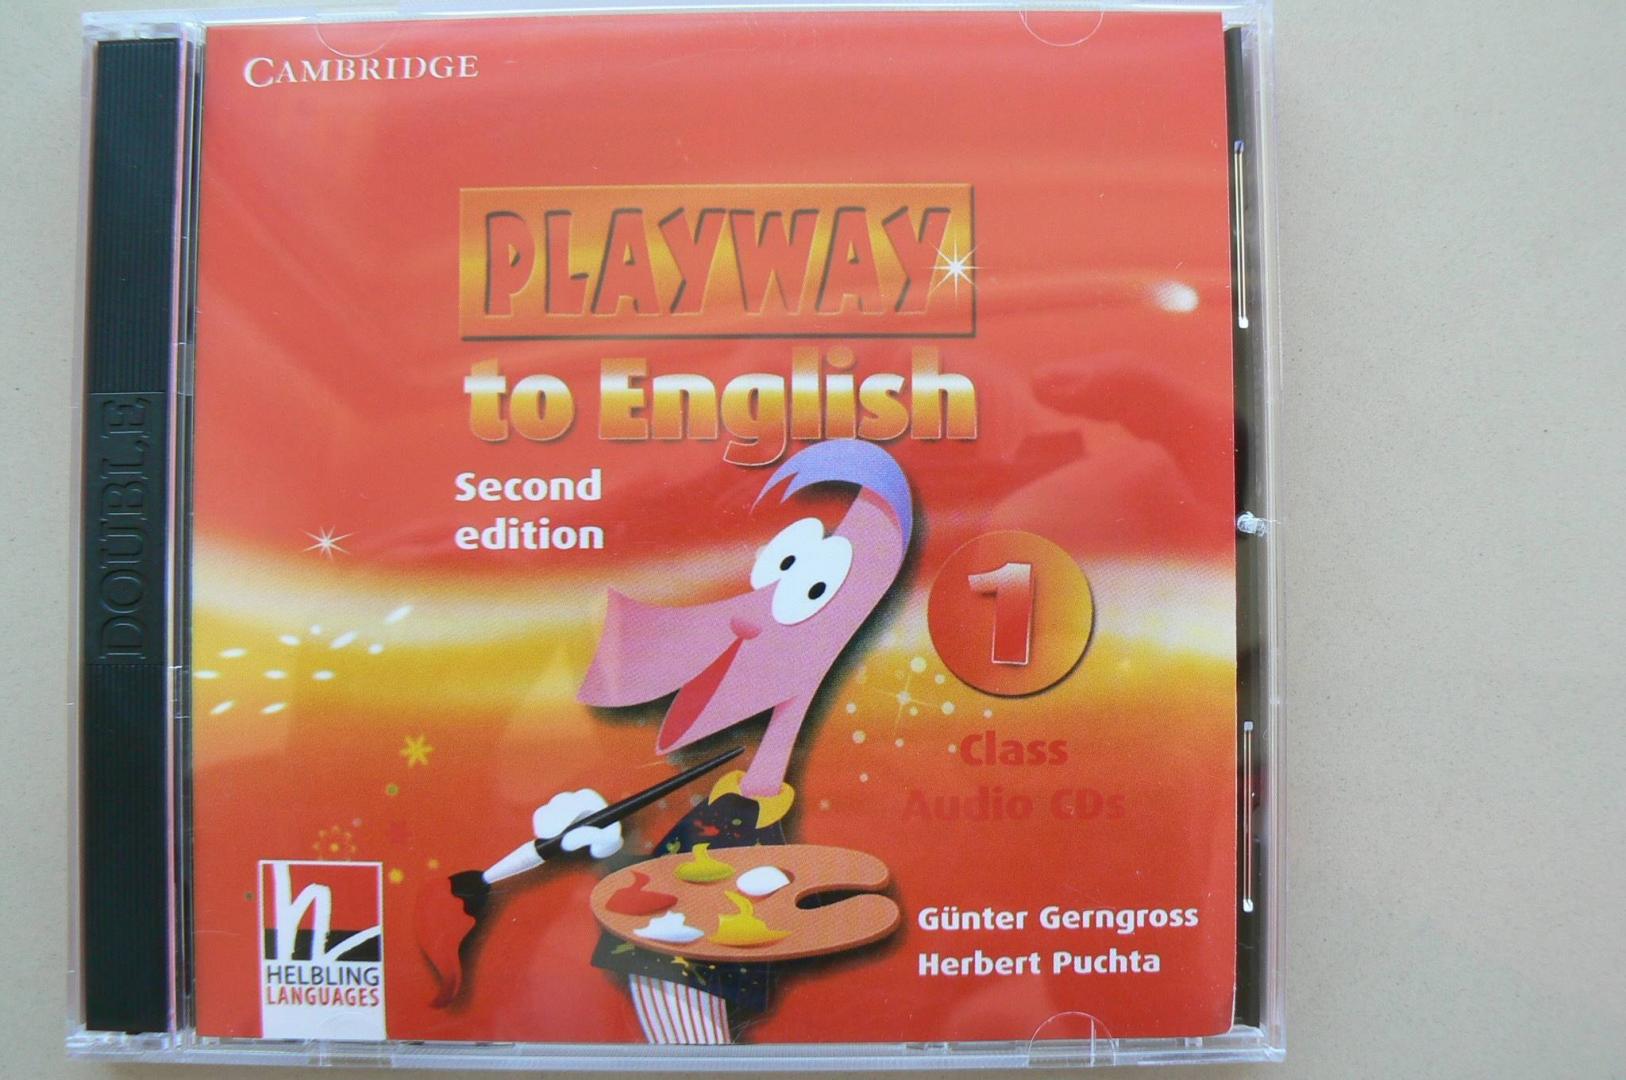 Rainbow english 4 класс аудио слушать. Playway 1. Playway 2. Playway 4. Playway to English 1 книга.